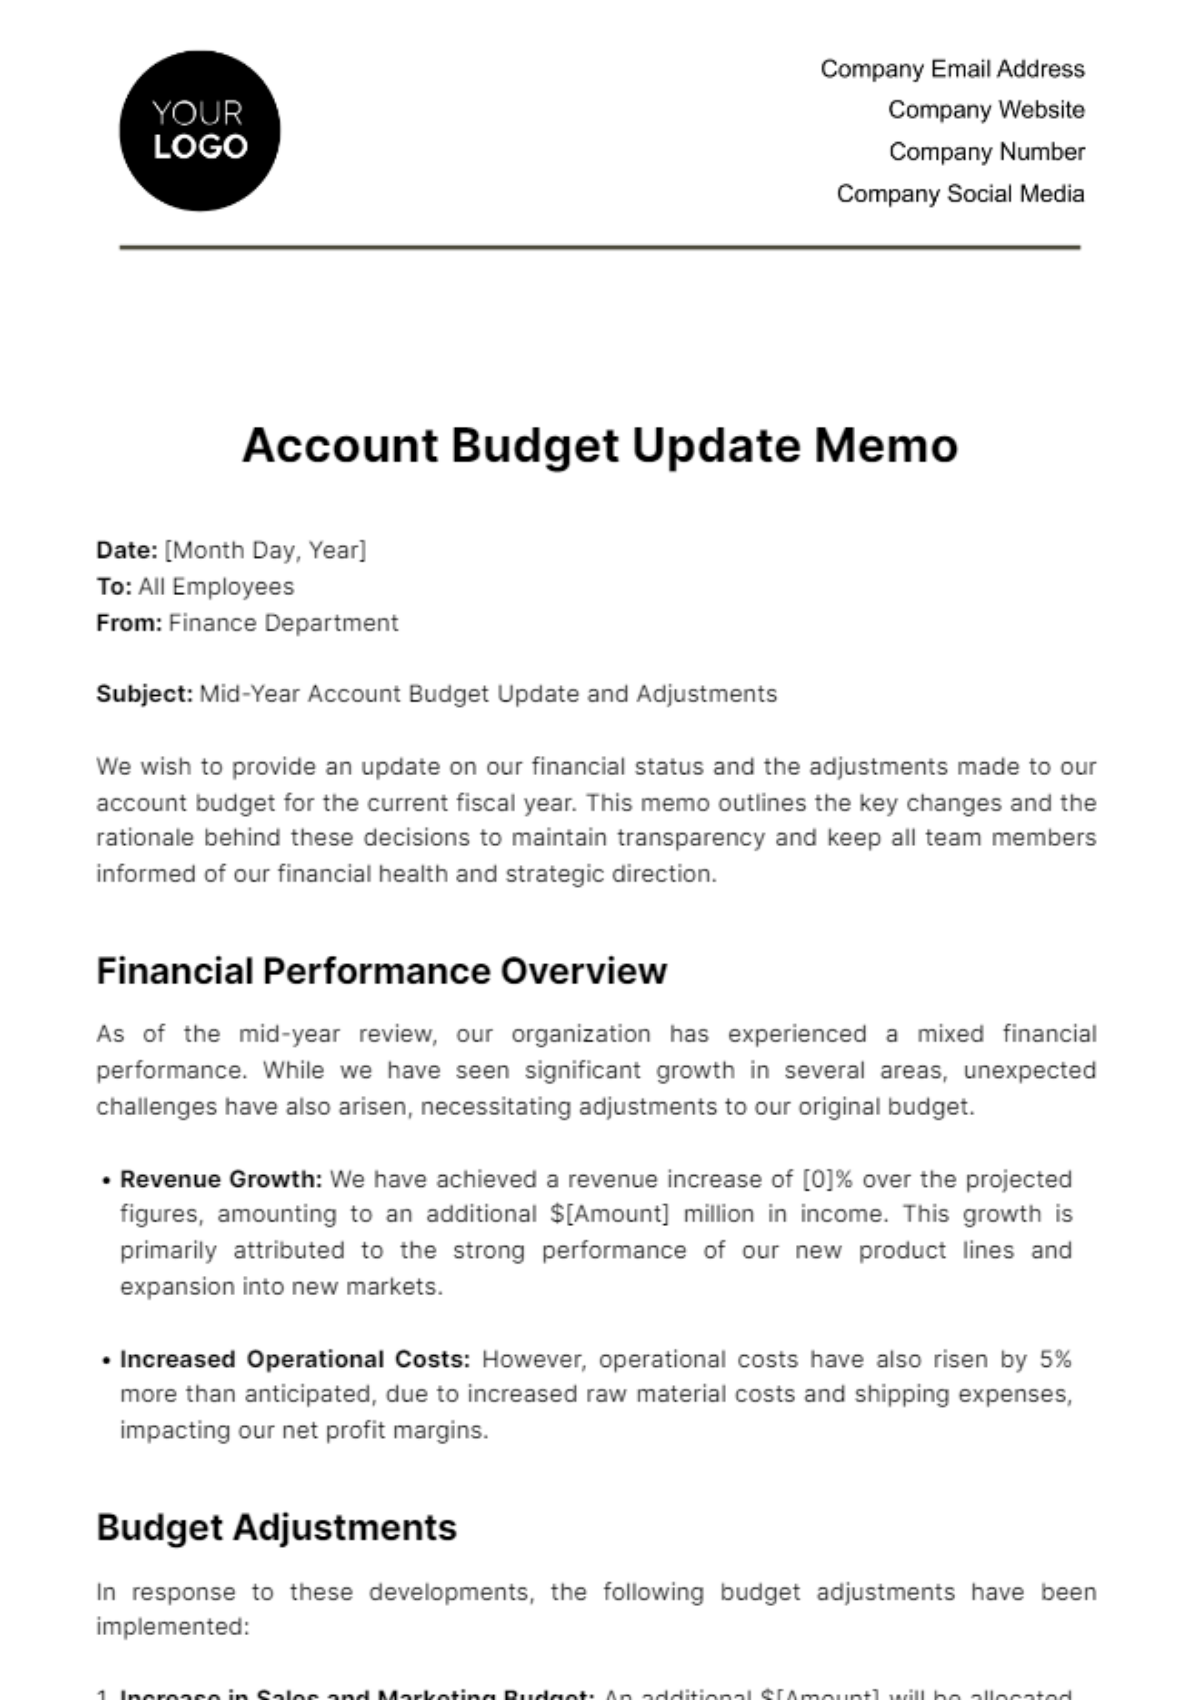 Account Budget Update Memo Template